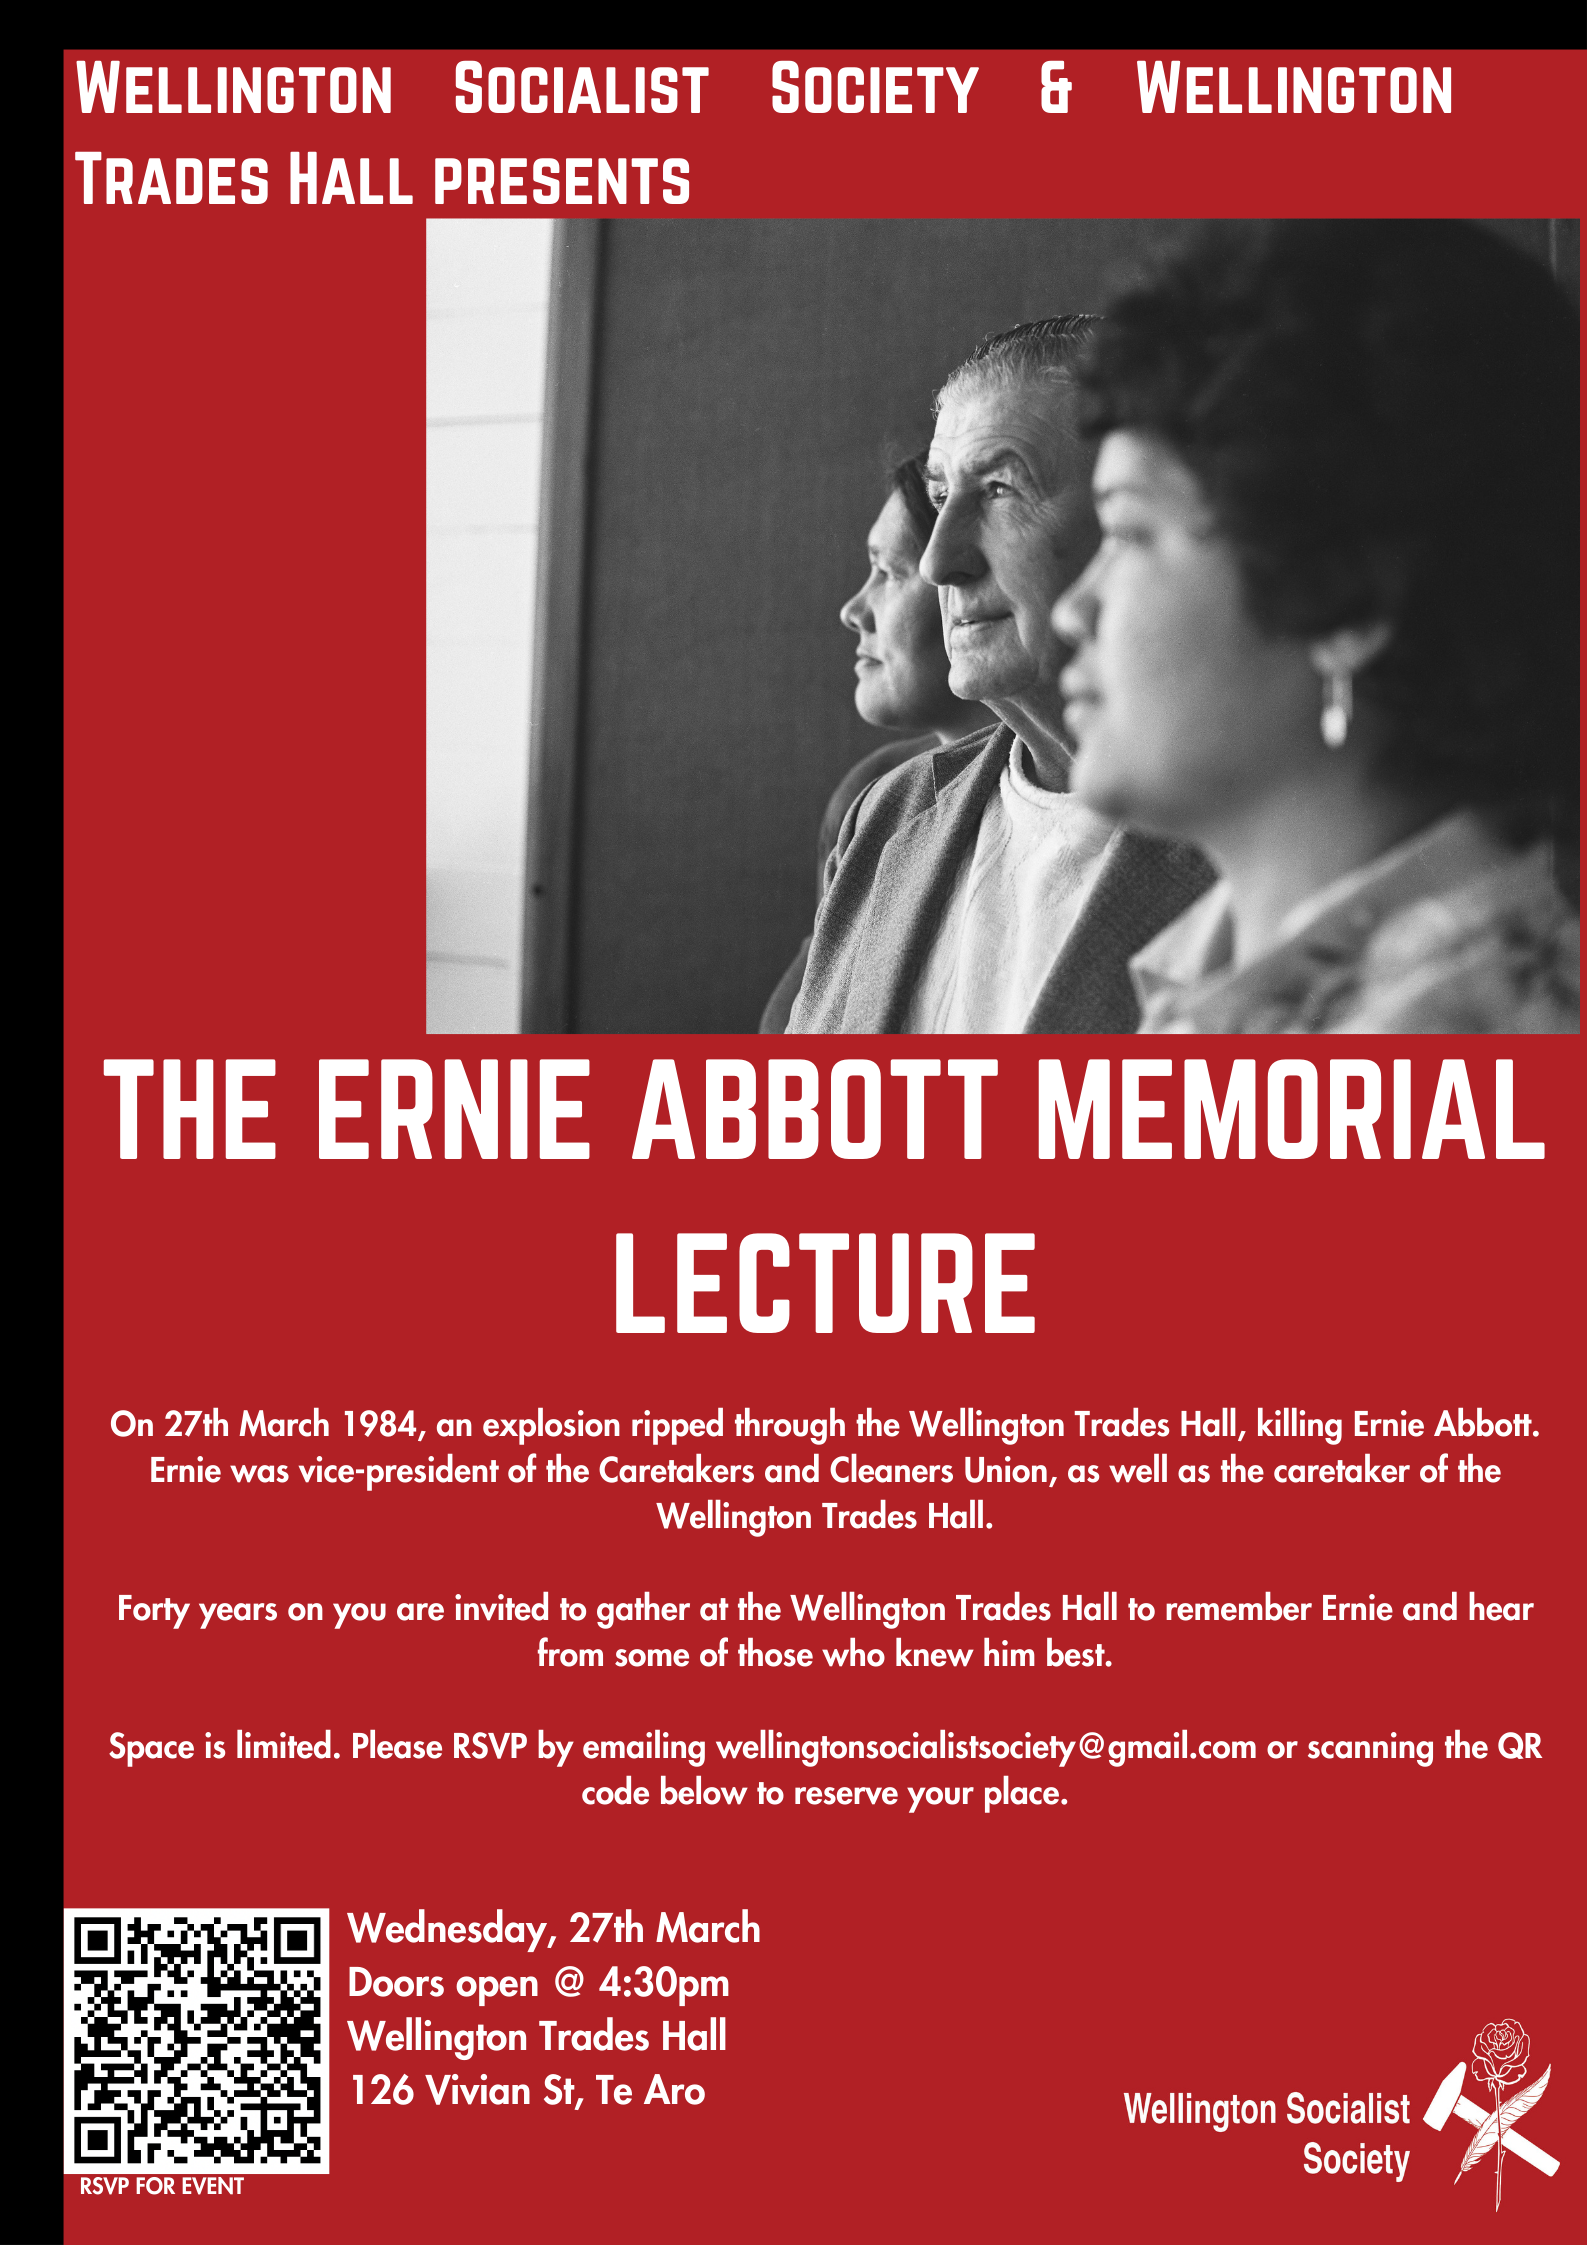 The Ernie Abbott Memorial Lecture